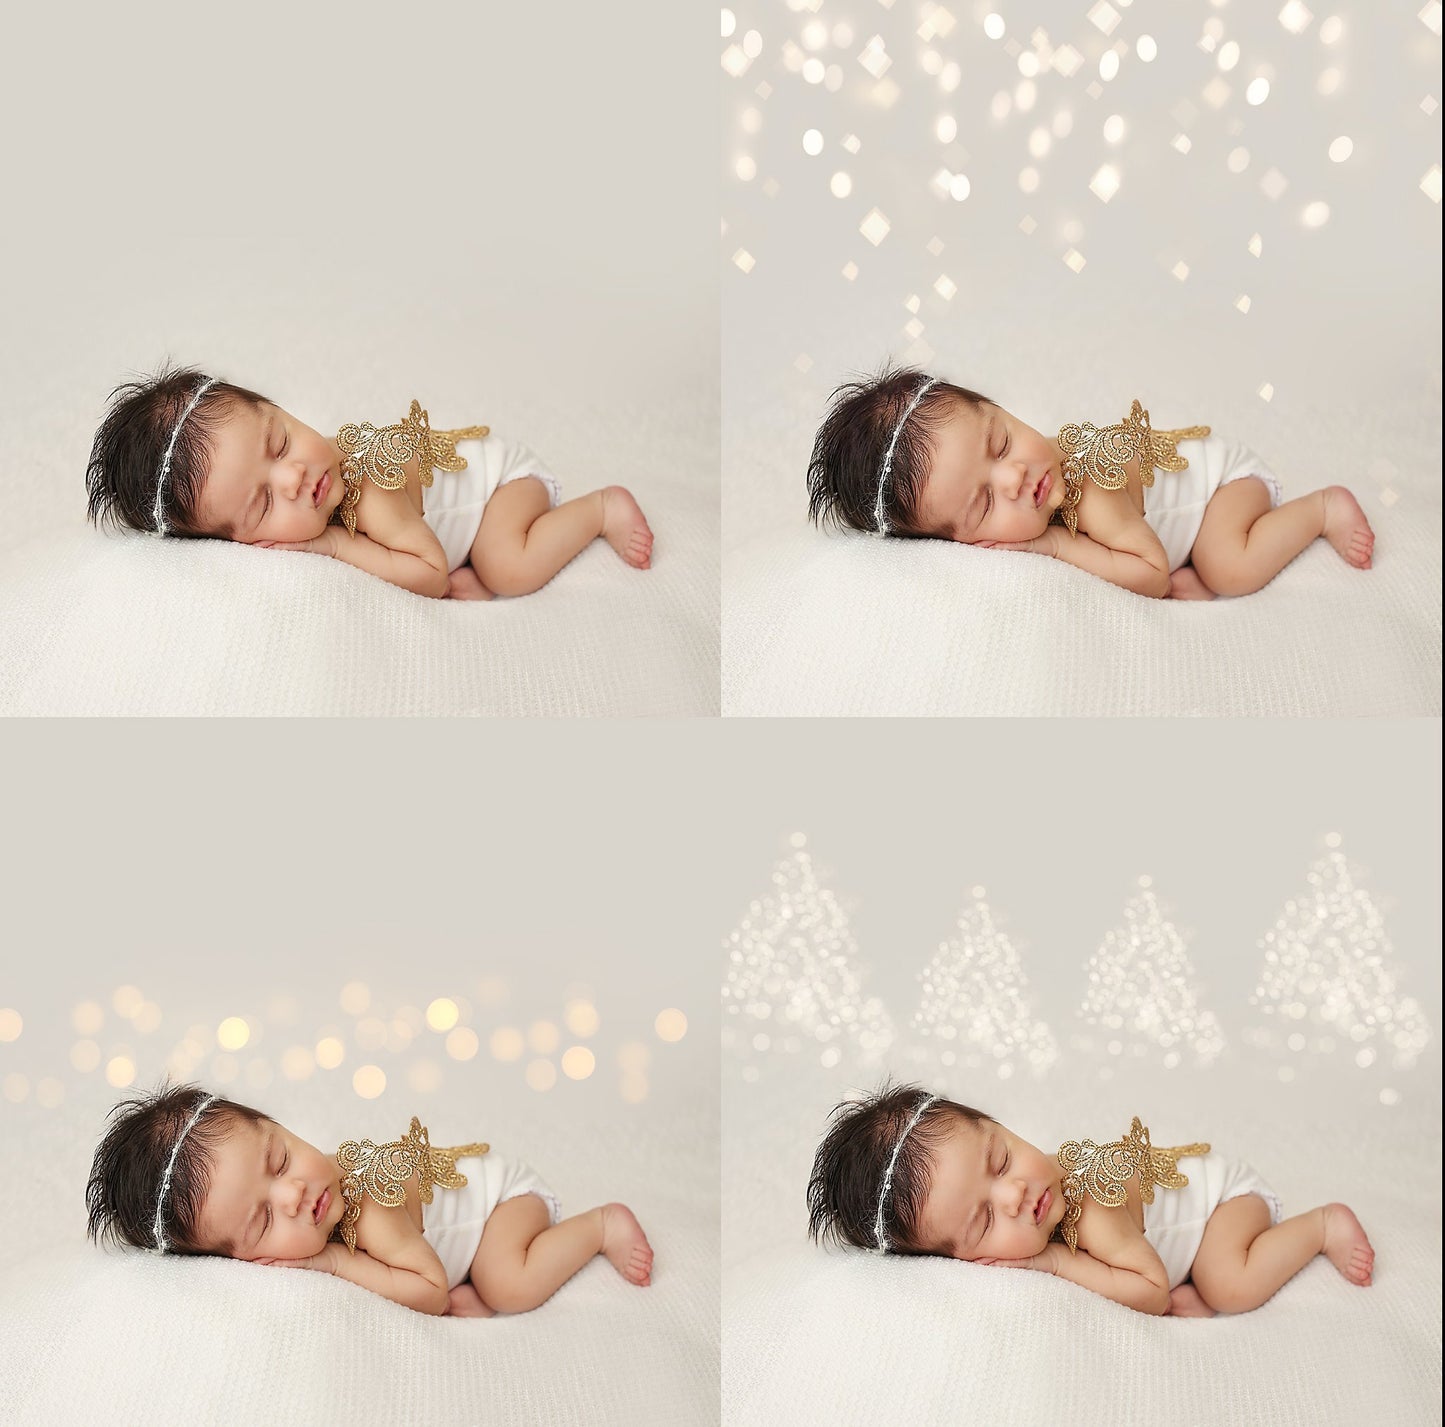 Christmas Fantasy Bokeh Light Overlays - Photoshop Overlays, Digital Backgrounds and Lightroom Presets